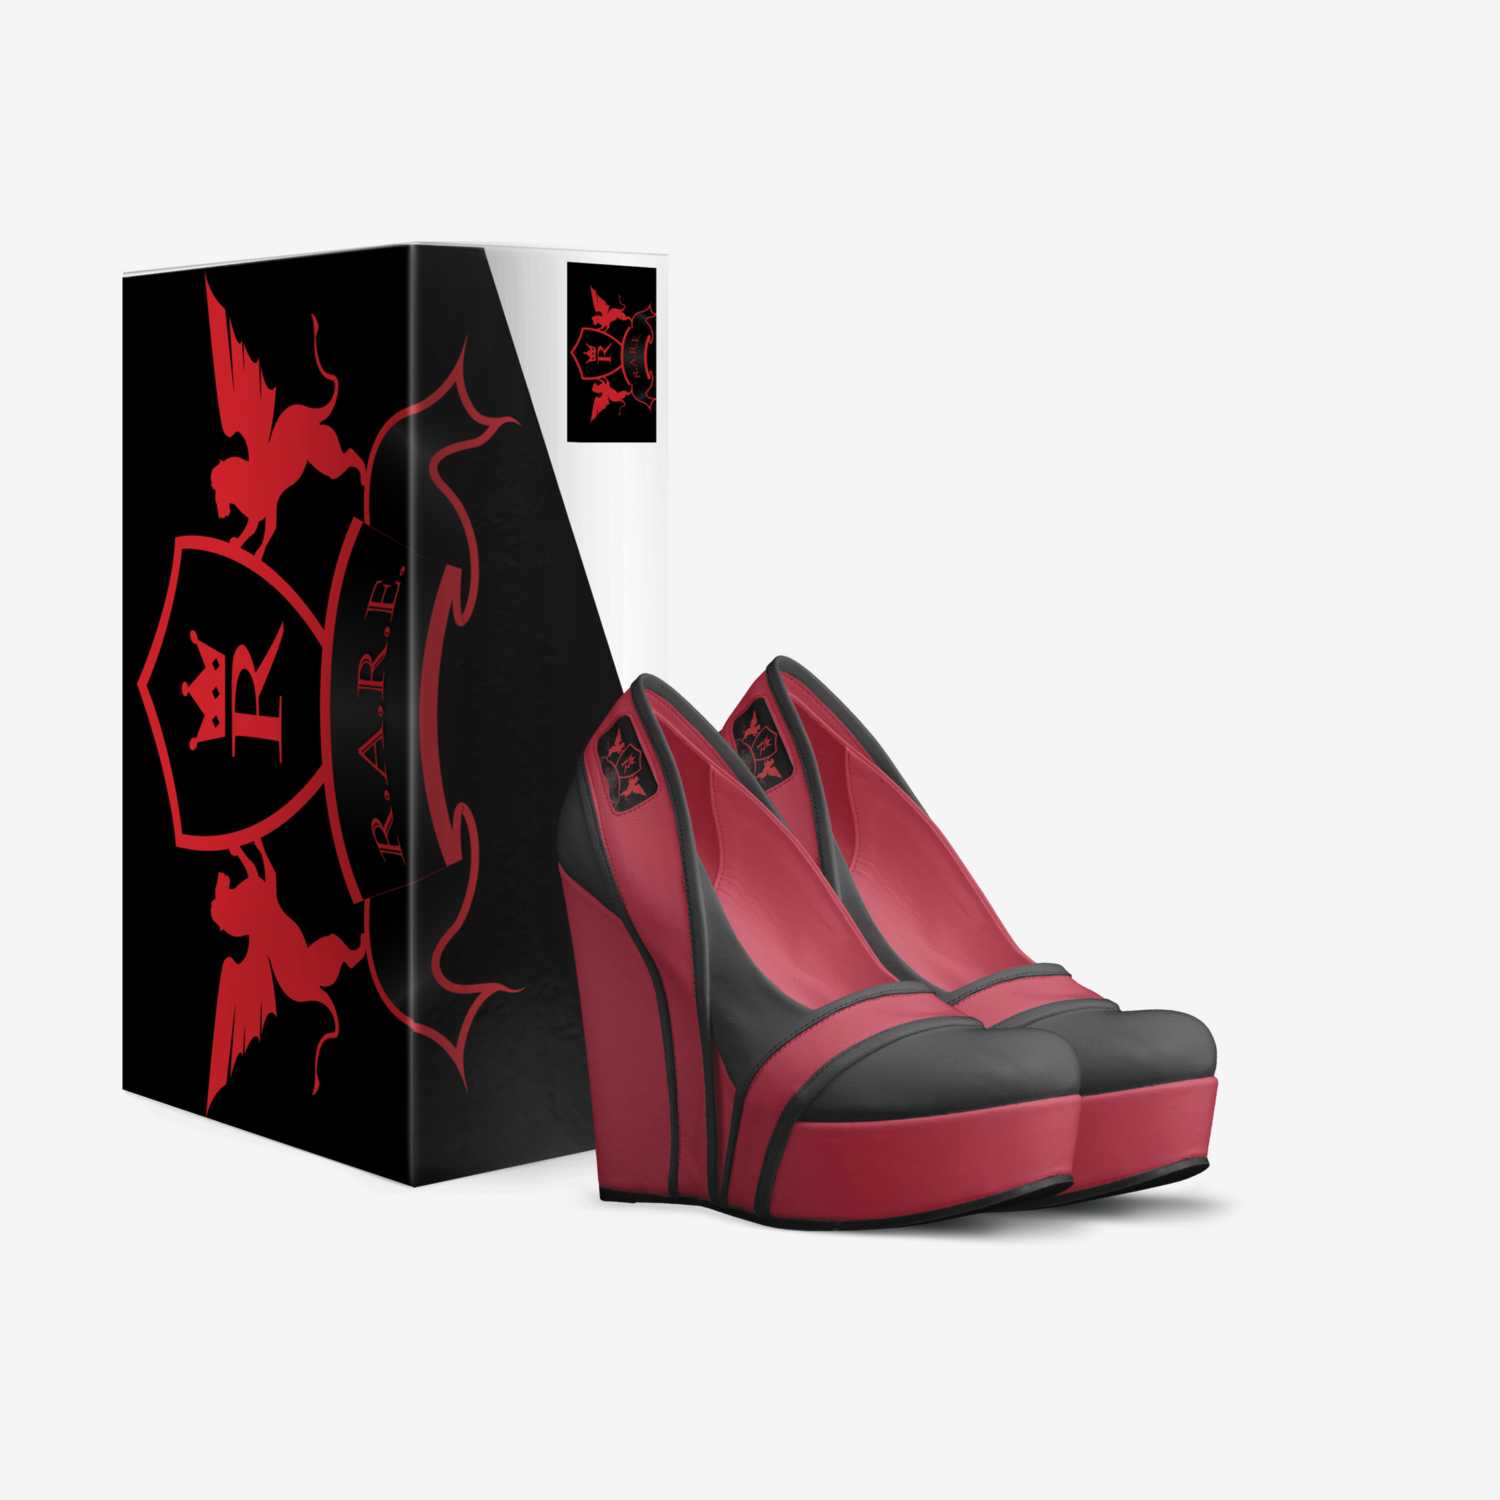 REDDWOMAN I custom made in Italy shoes by John A. Annan | Box view